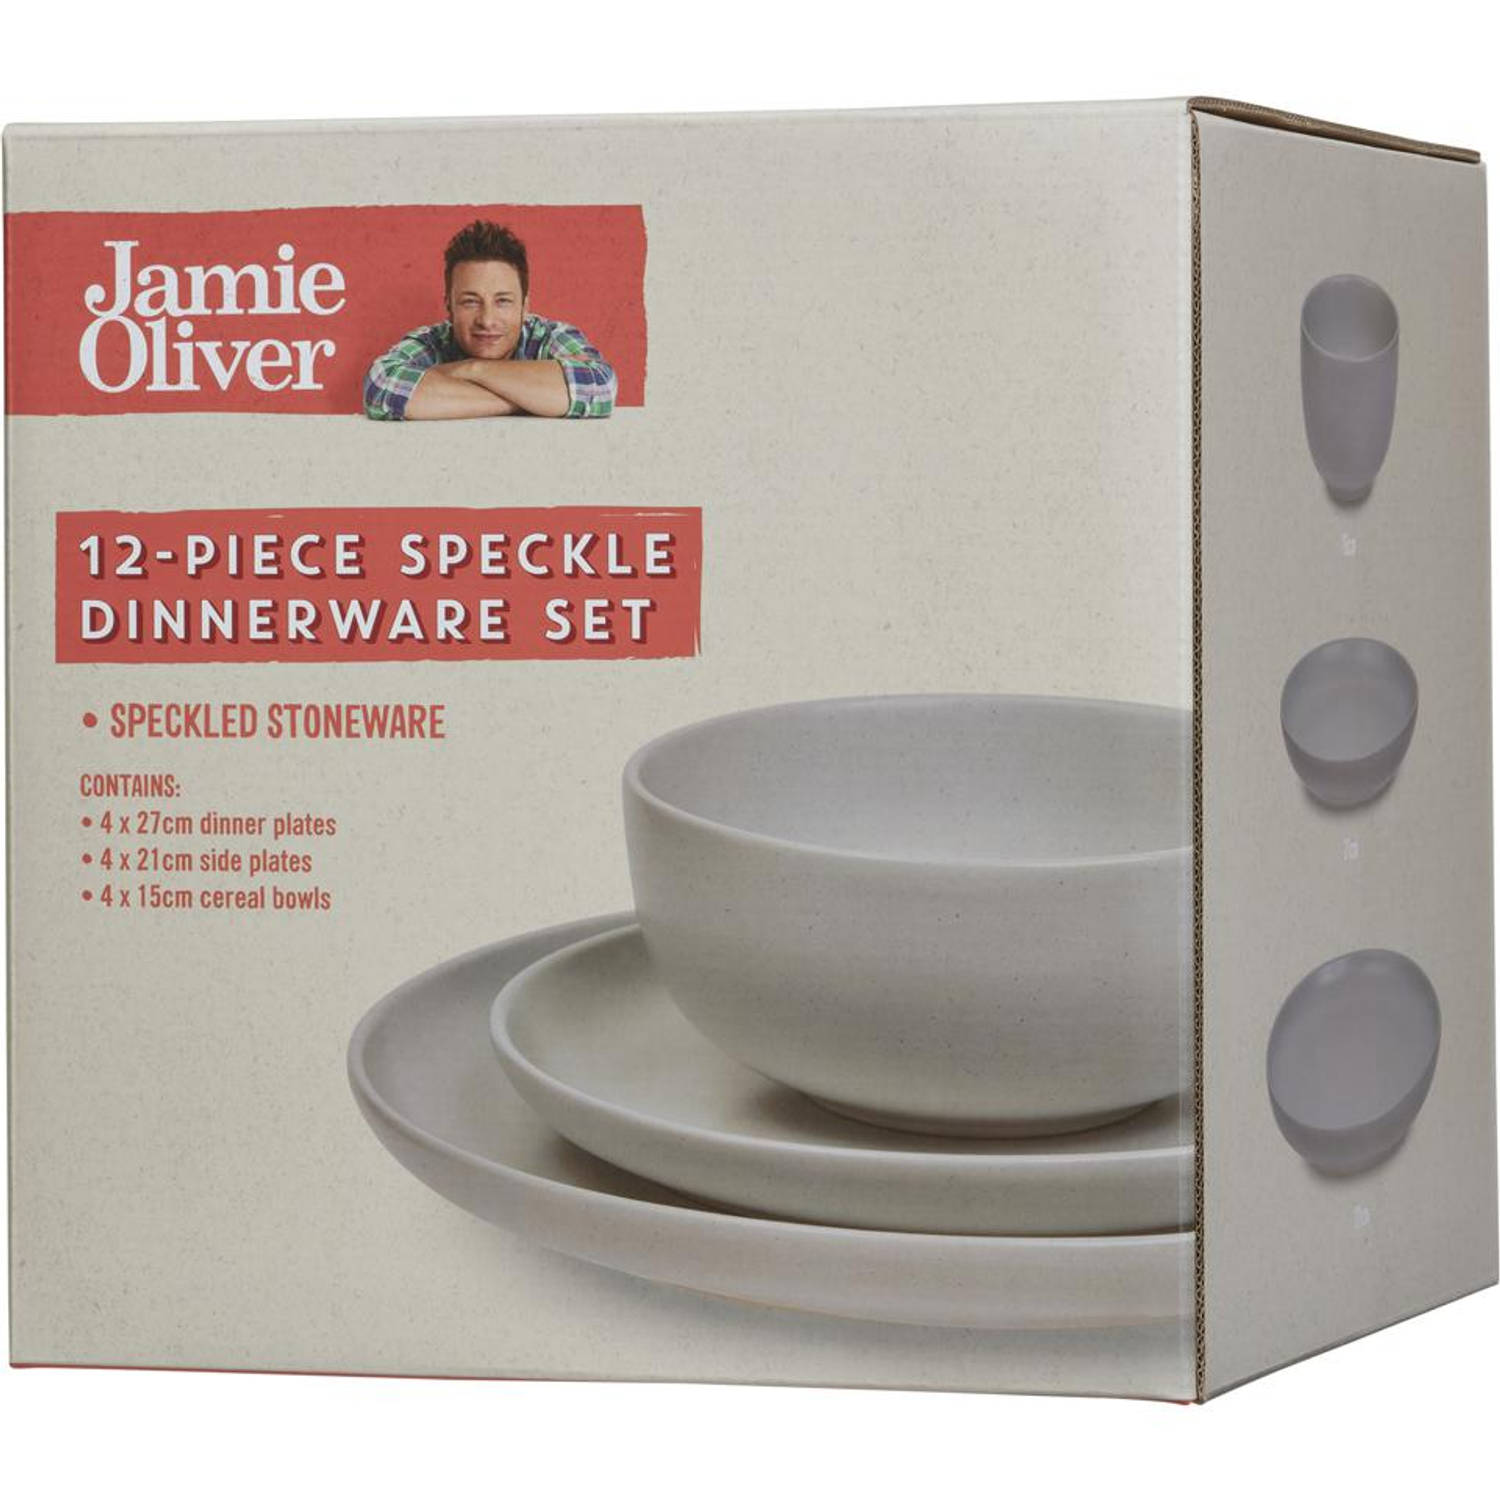 Yoghurt vliegtuigen Dekking Jamie Oliver Speckle serviesset - 4-persoons - 12-delig | Blokker